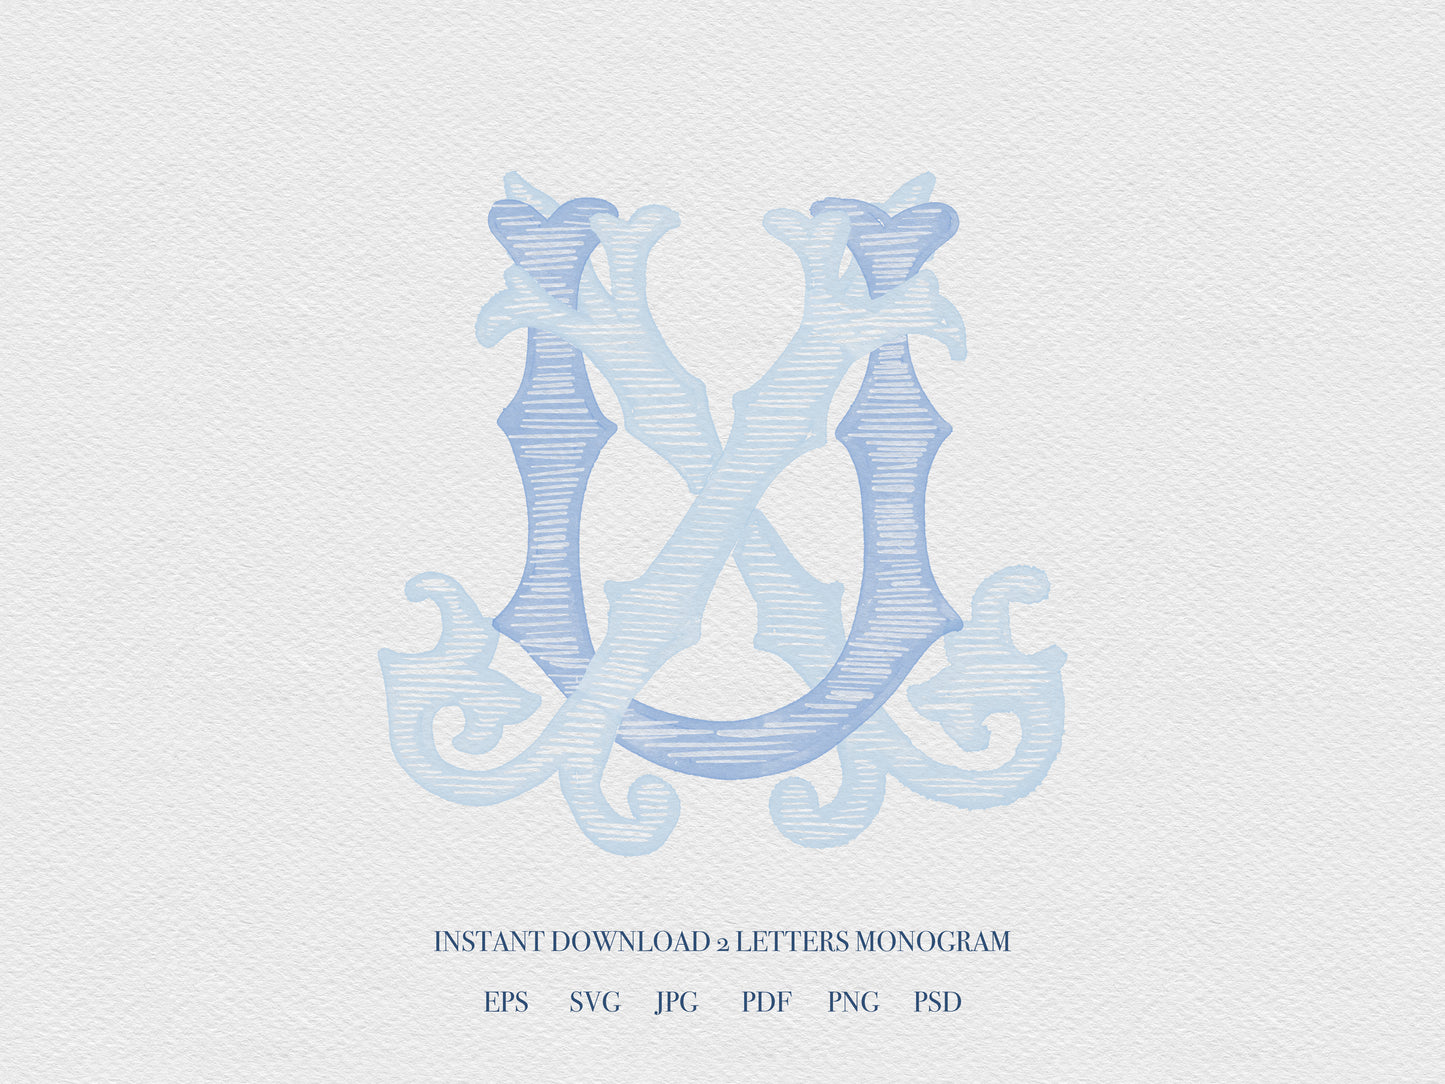 2 Letter Monogram with Letters UX XU | Digital Download - Wedding Monogram SVG, Personal Logo, Wedding Logo for Wedding Invitations The Wedding Crest Lab